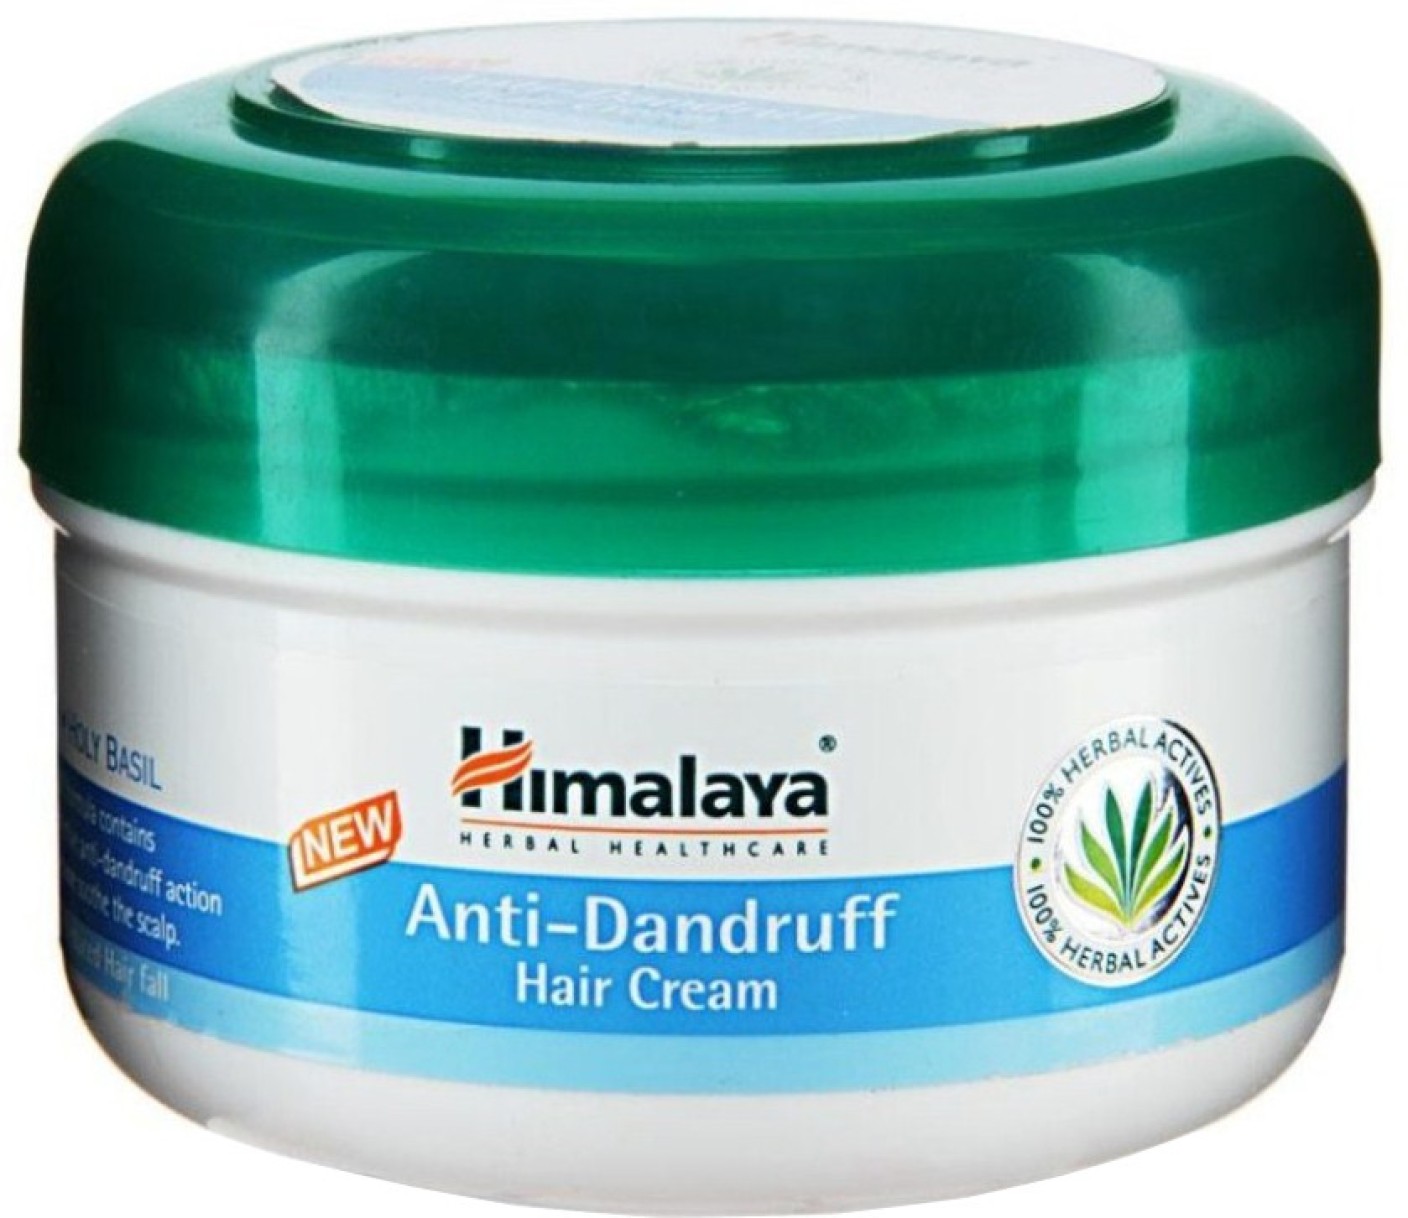 himalaya-anti-dandruff-hair-cream